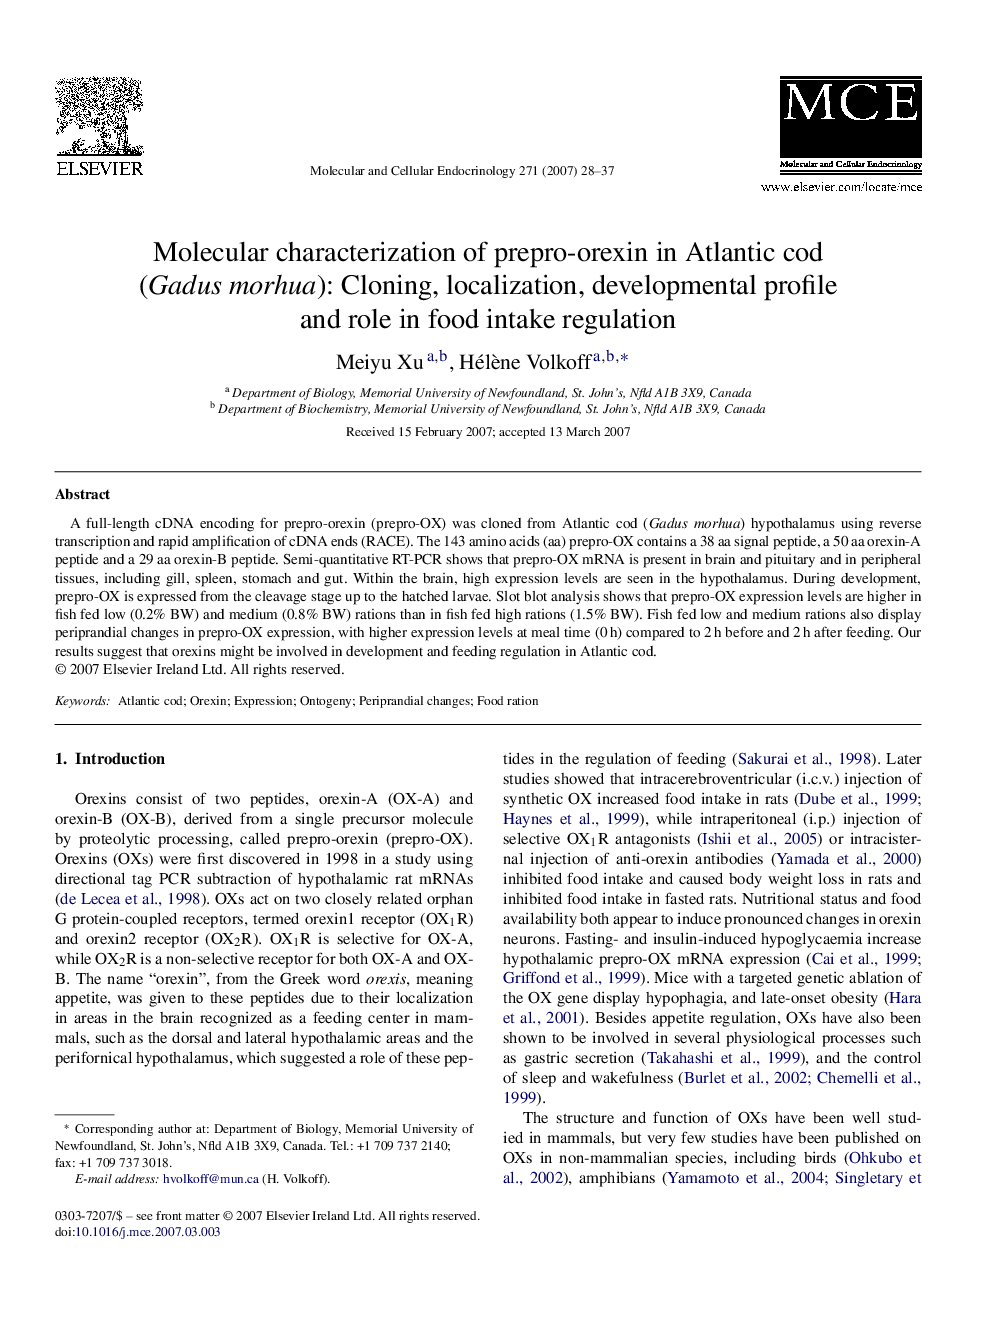 Molecular characterization of prepro-orexin in Atlantic cod (Gadus morhua): Cloning, localization, developmental profile and role in food intake regulation